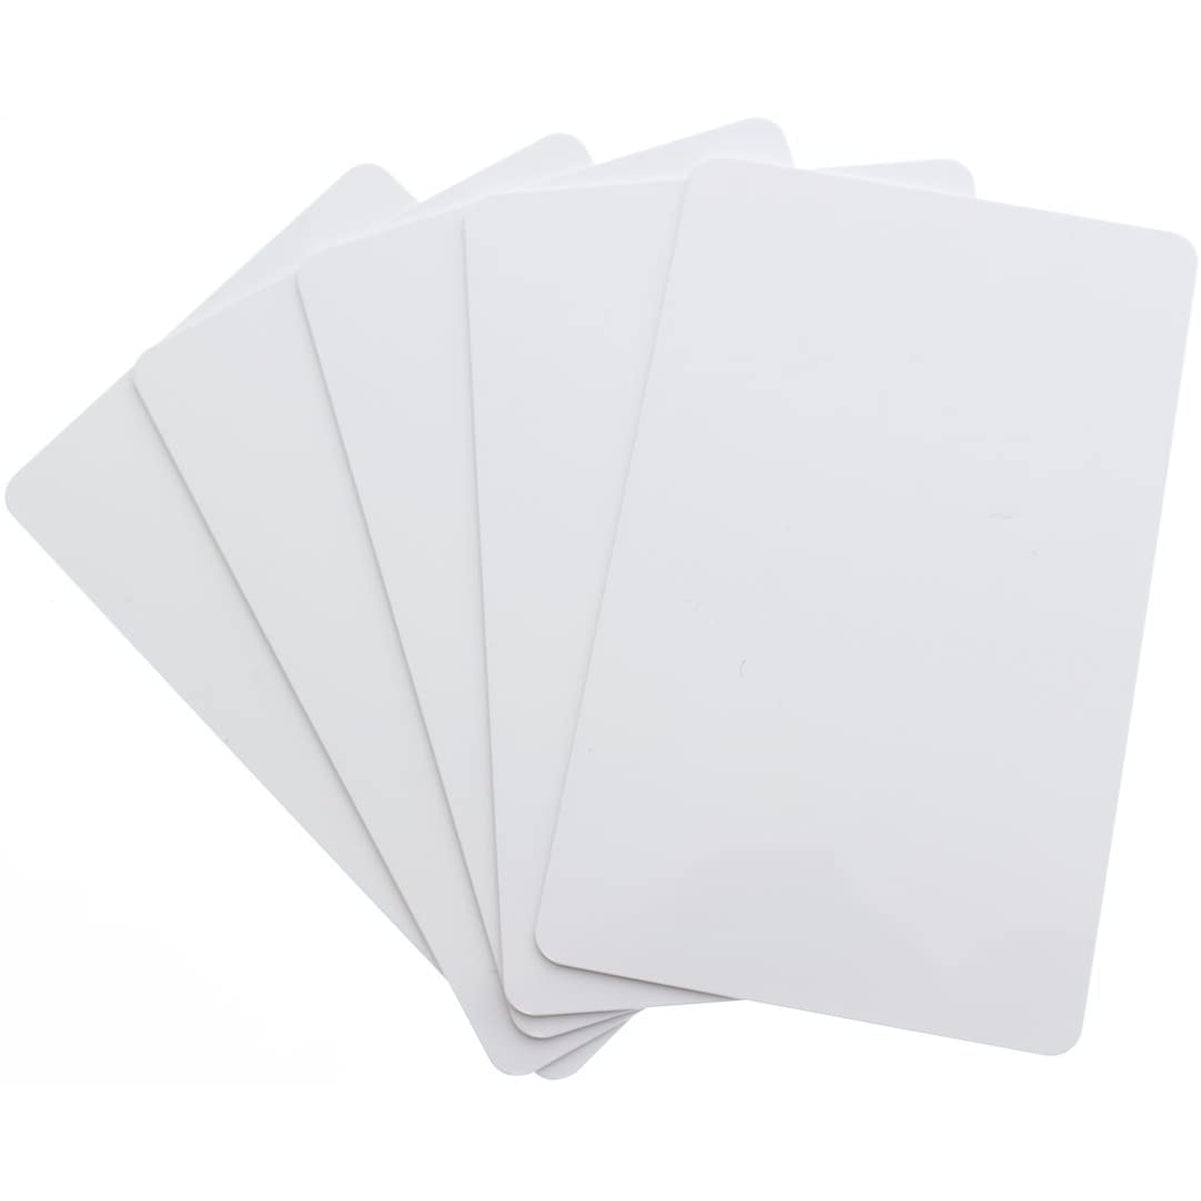 Blank PVC Cards - Standard CR80 Cards